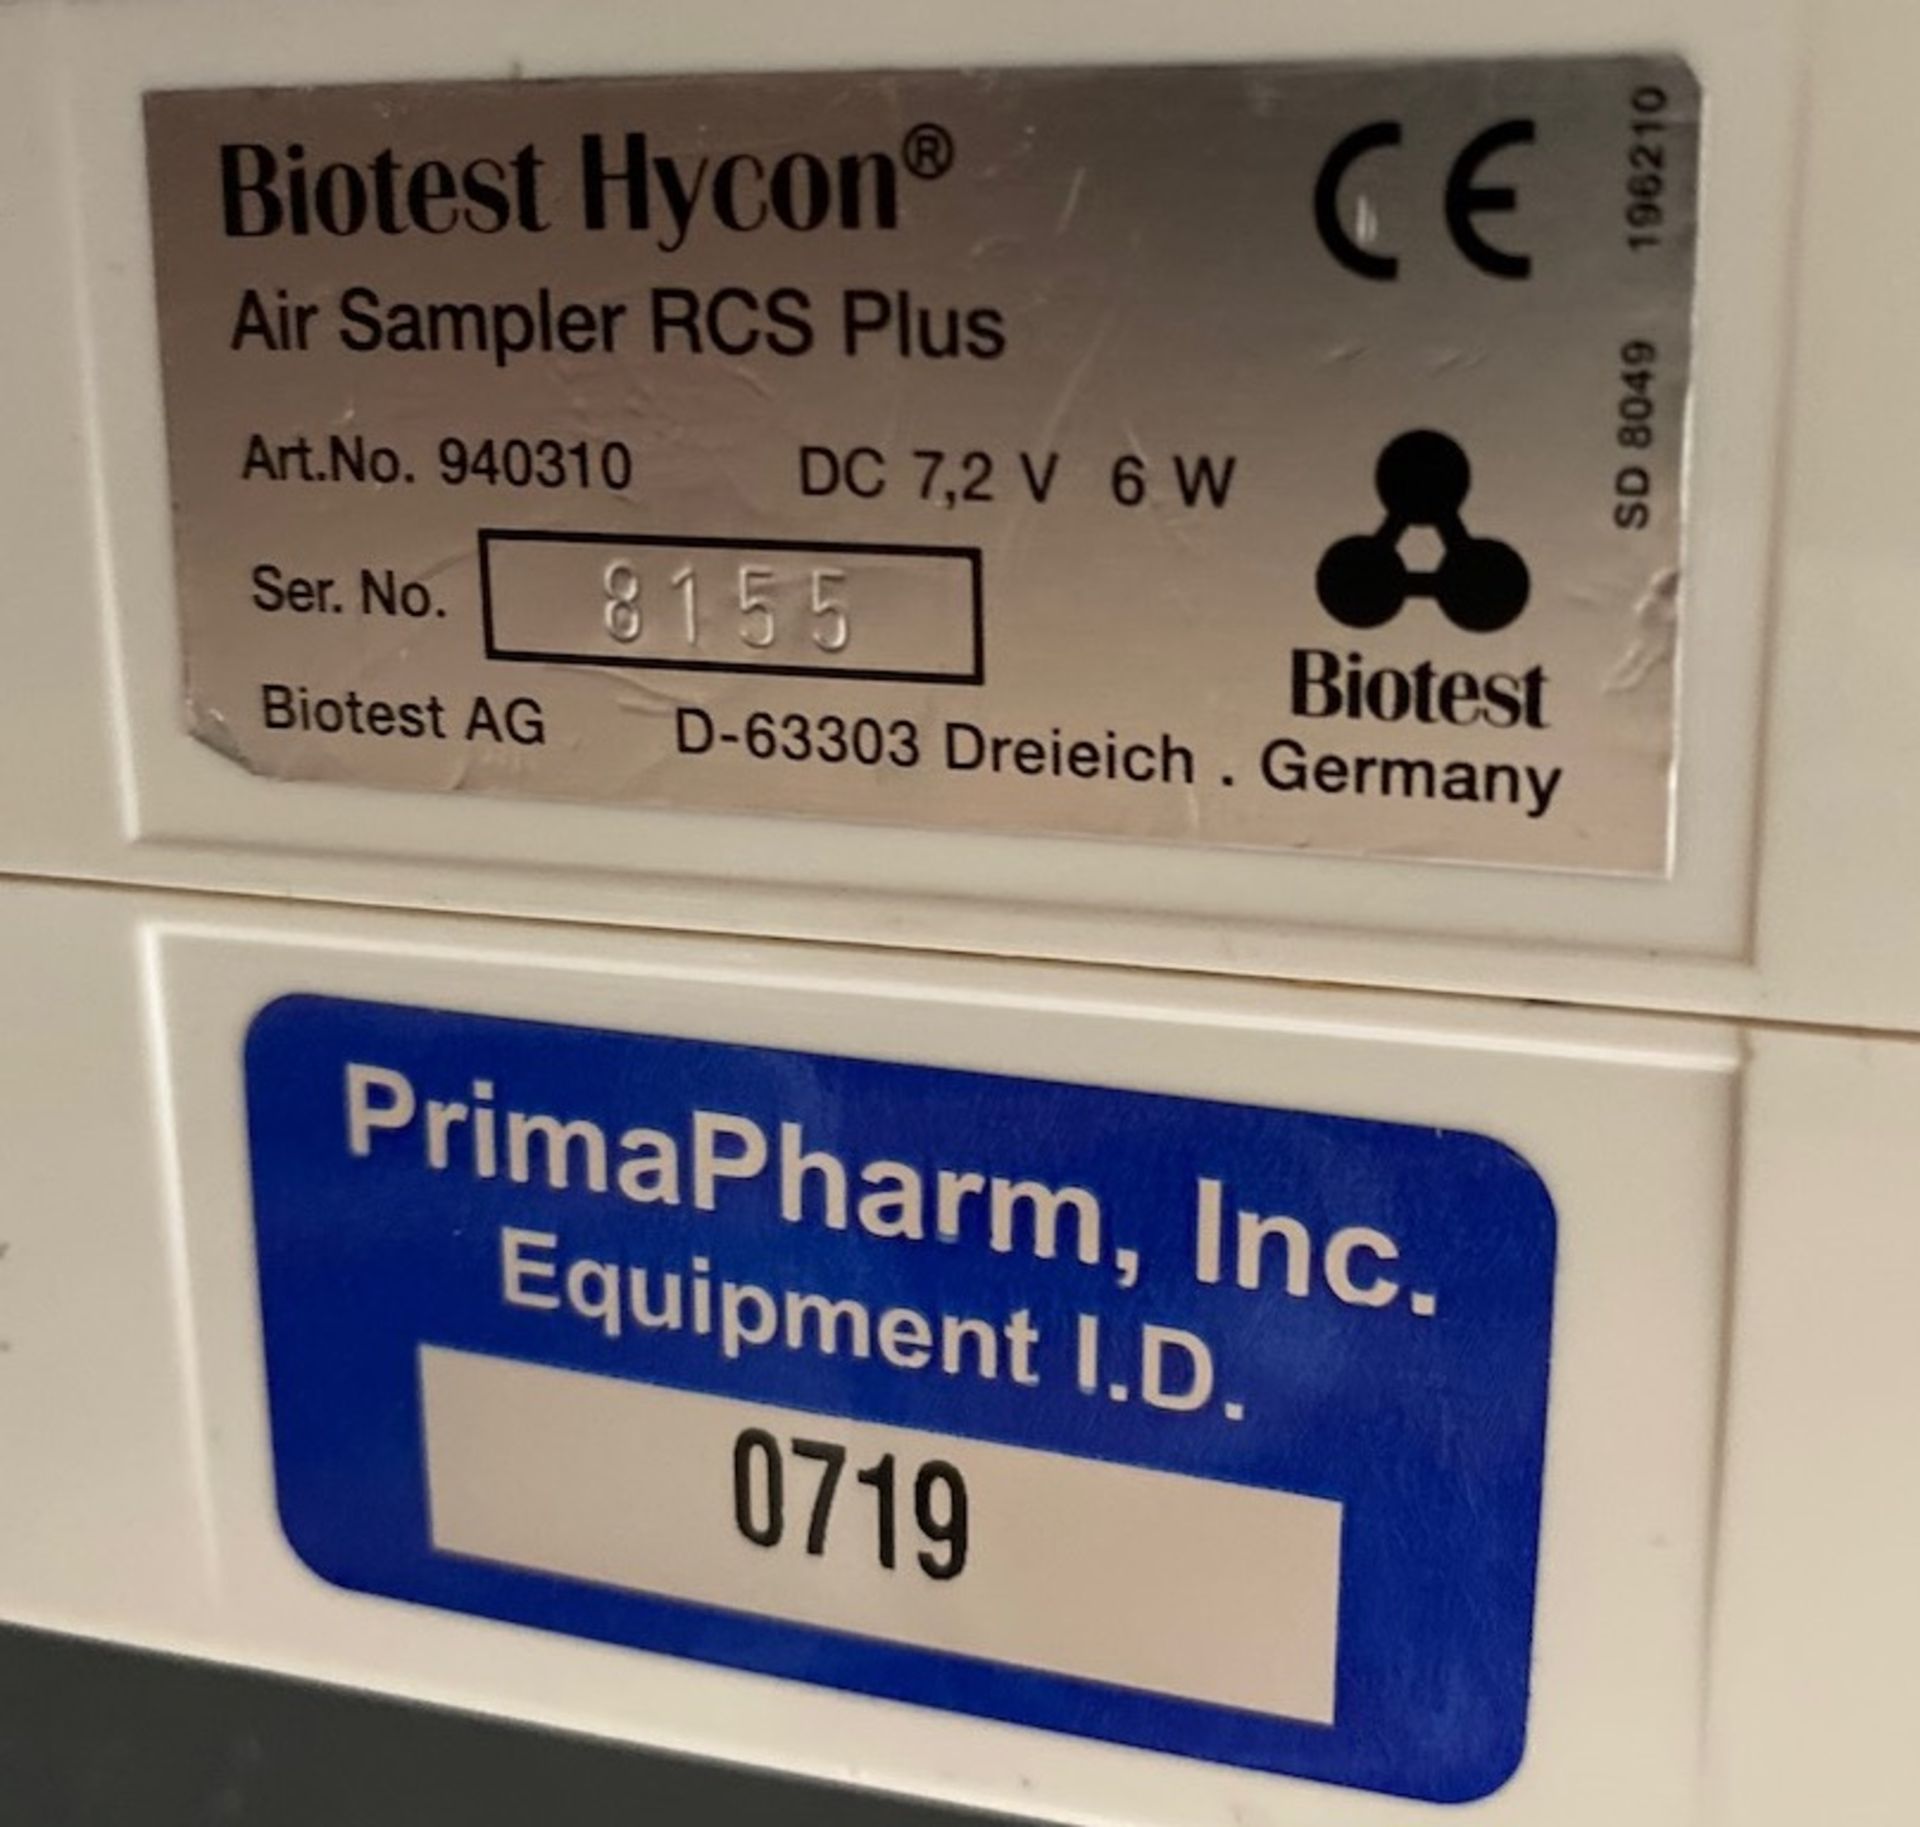 Biotest Hycon RCS Plus Air Sampler - Image 3 of 3